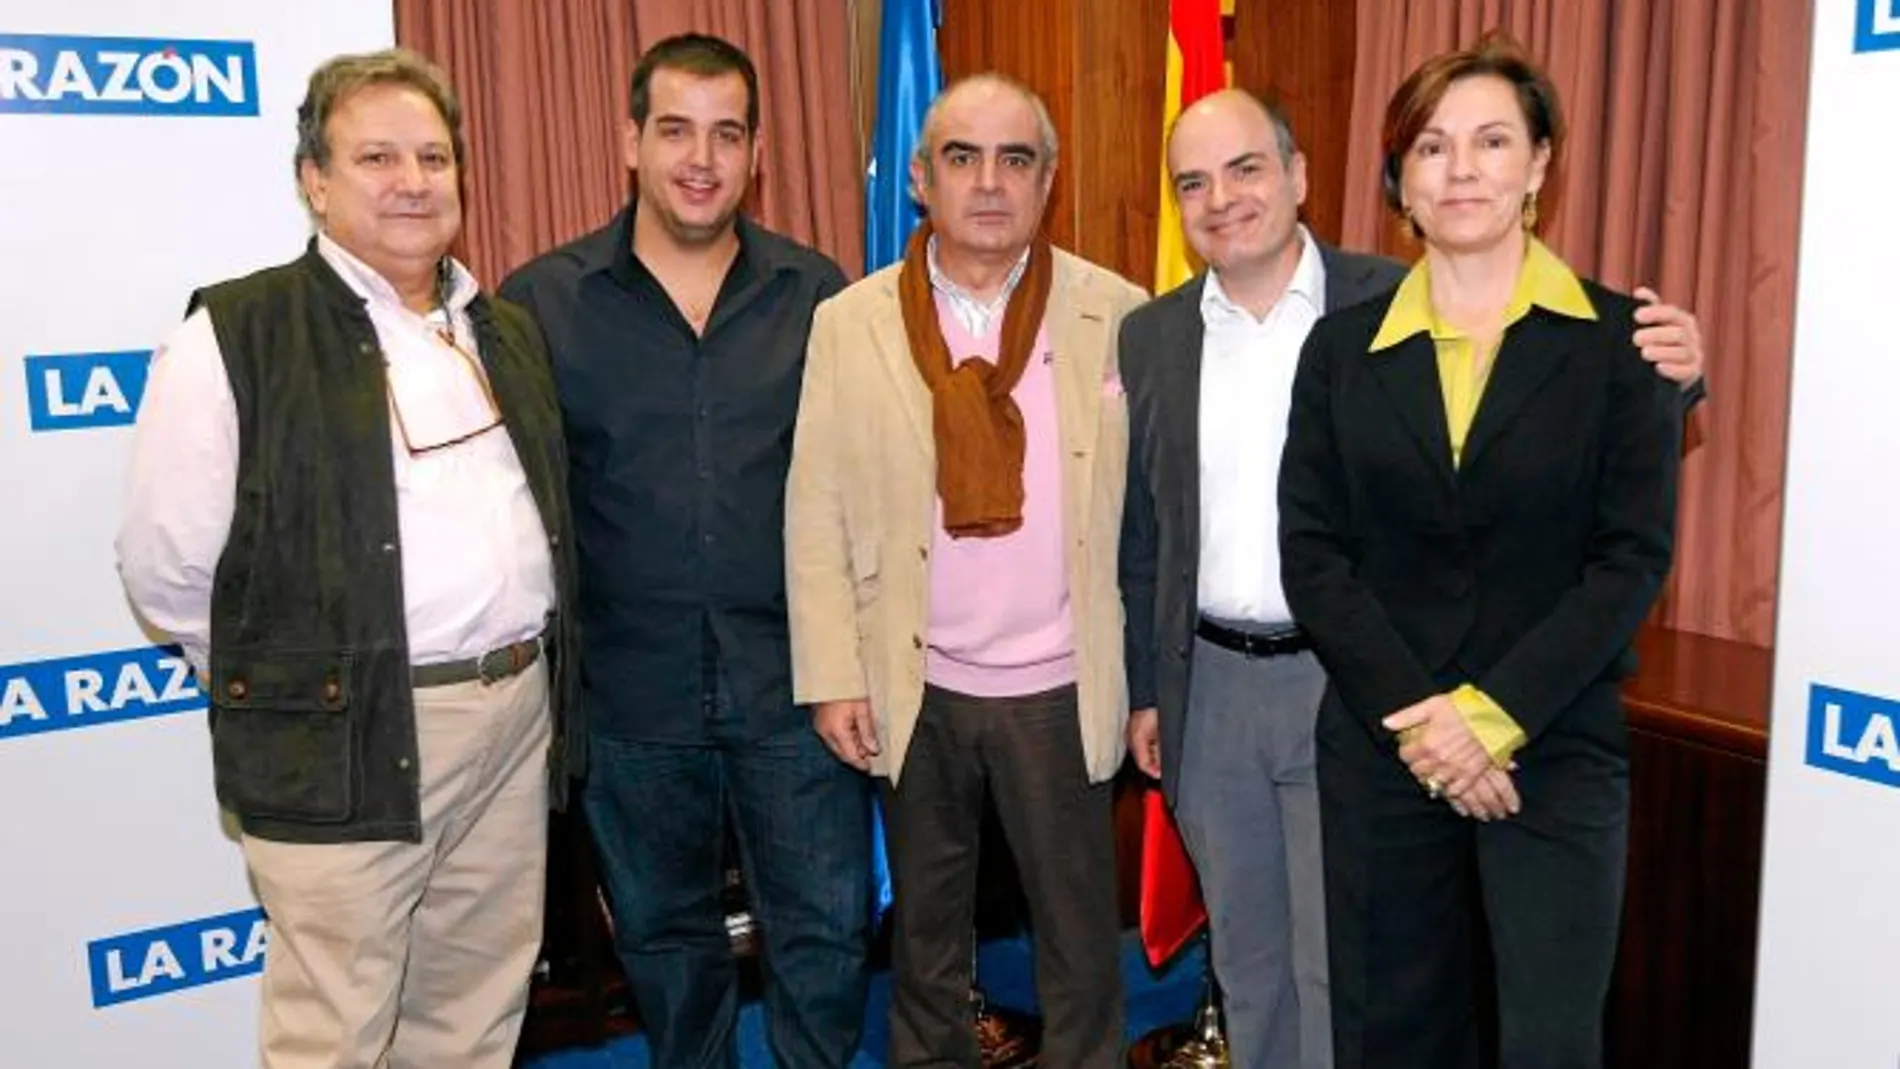 De izda. a dcha., Pedro Jiménez, Oriol Carreras, Antonio Serrano, Jordi Vergés, y Ana Larrañaga en LA RAZÓN